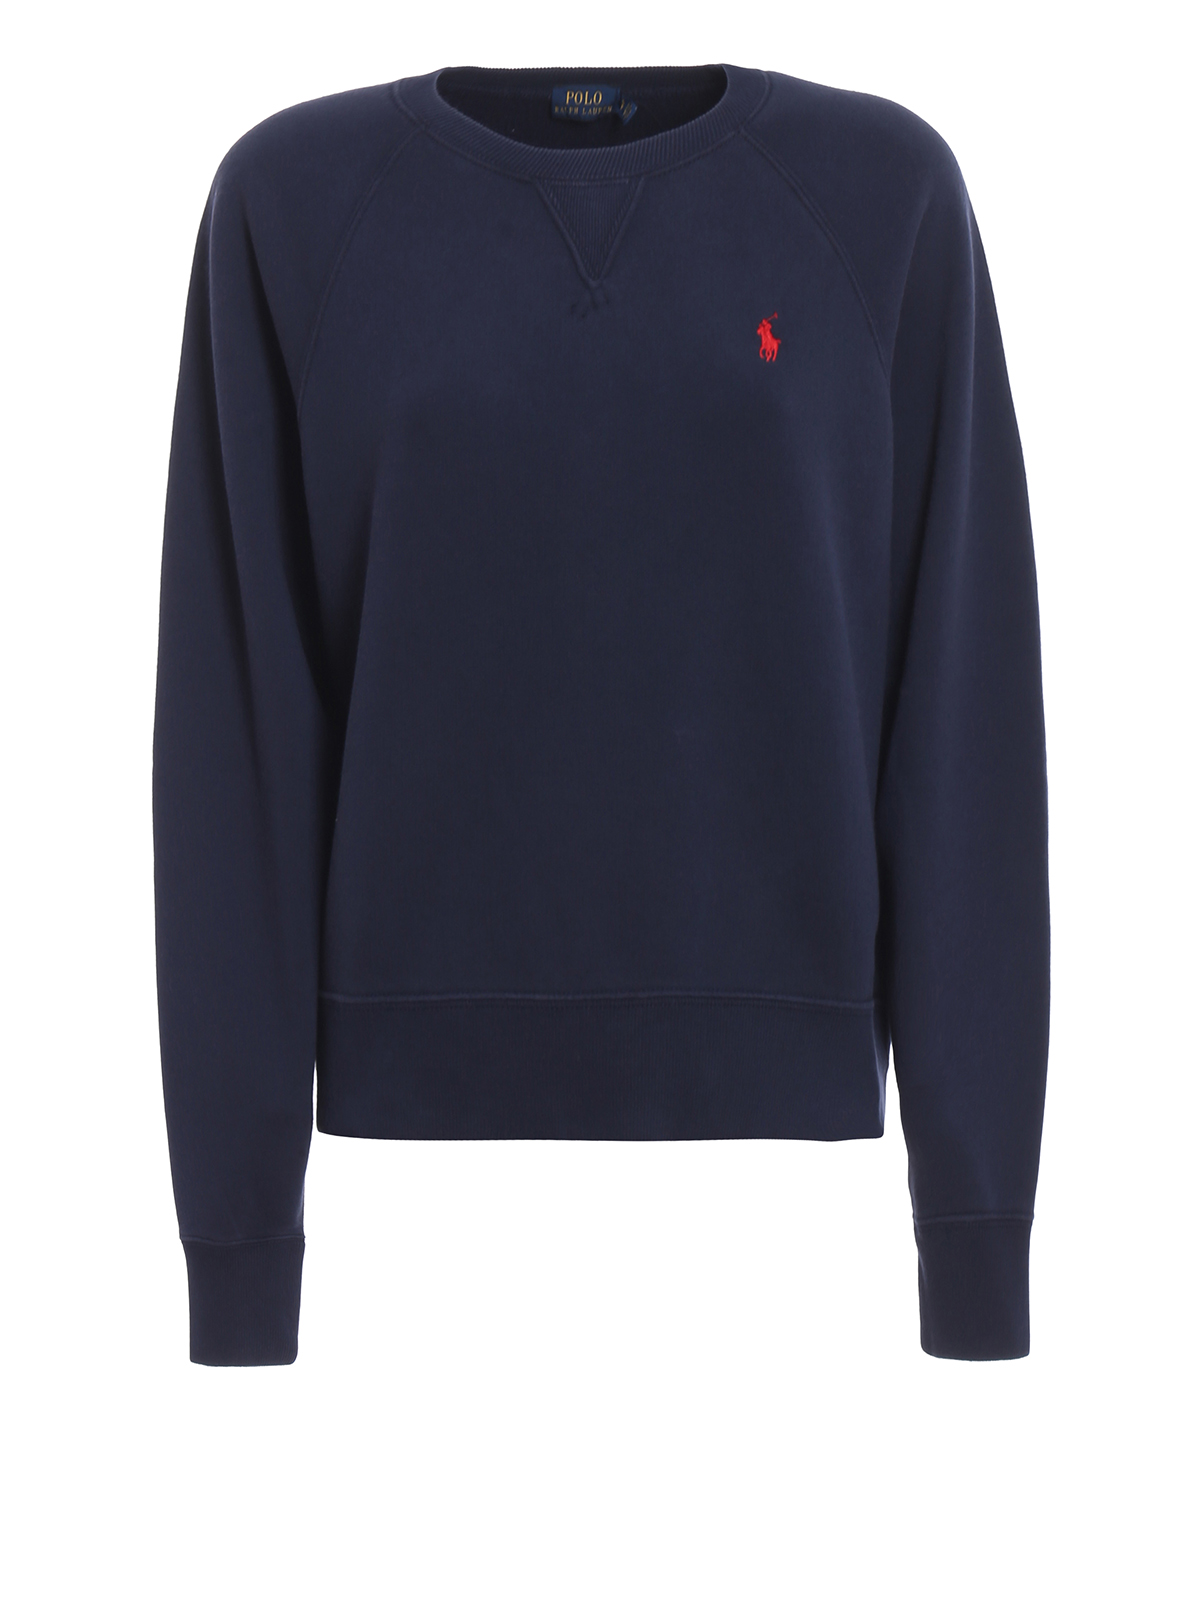 Polo Ralph Lauren - Crew neck sweatshirt with red logo - Sweatshirts ...